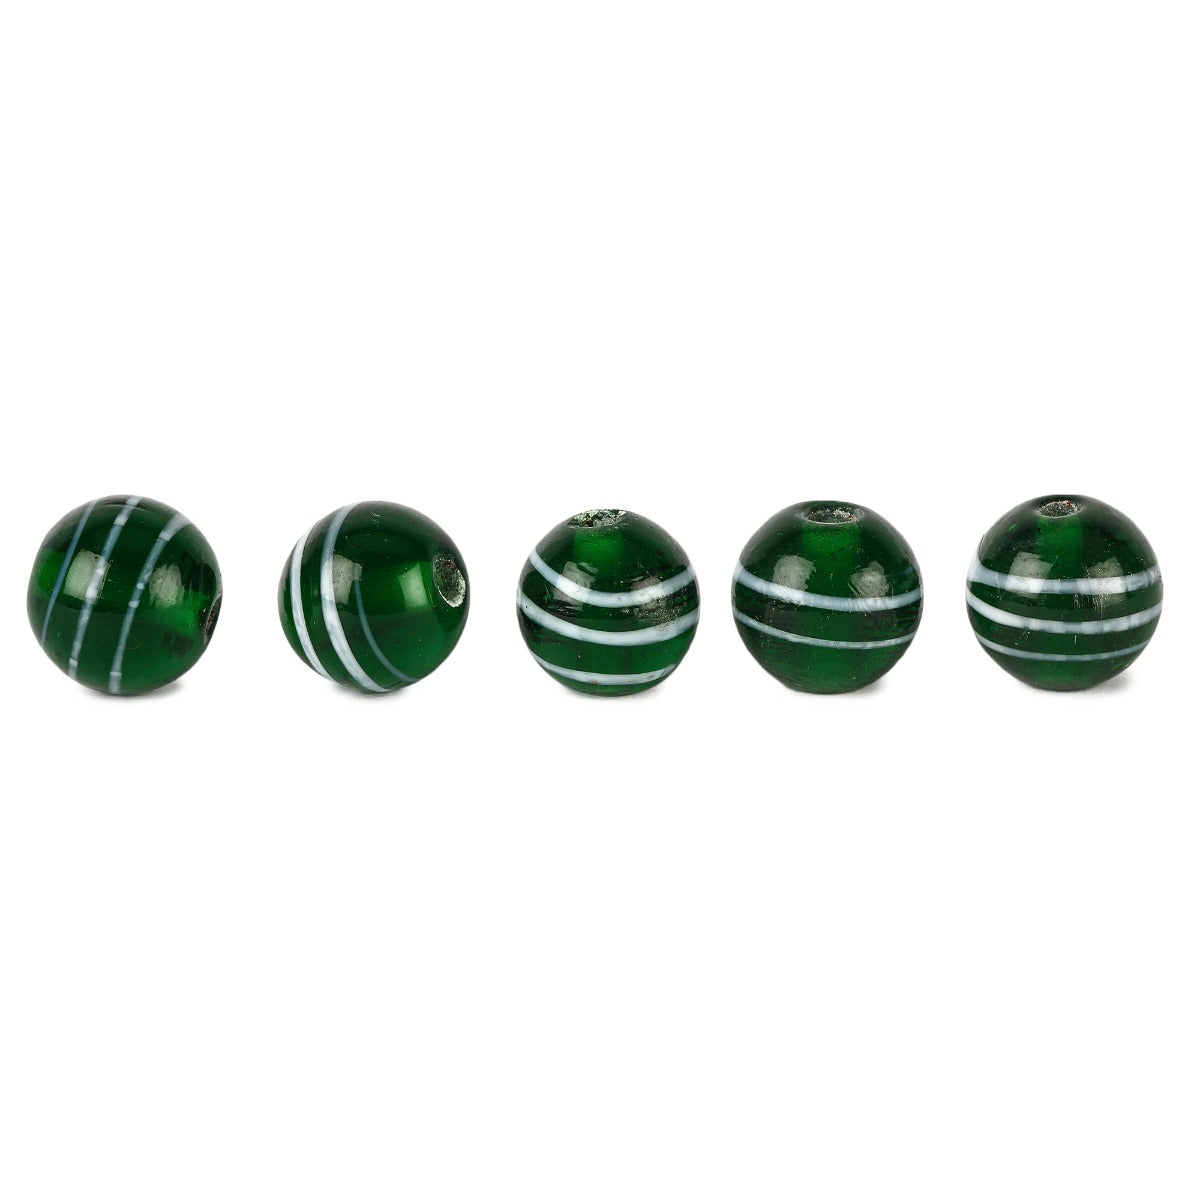 Green glass bead